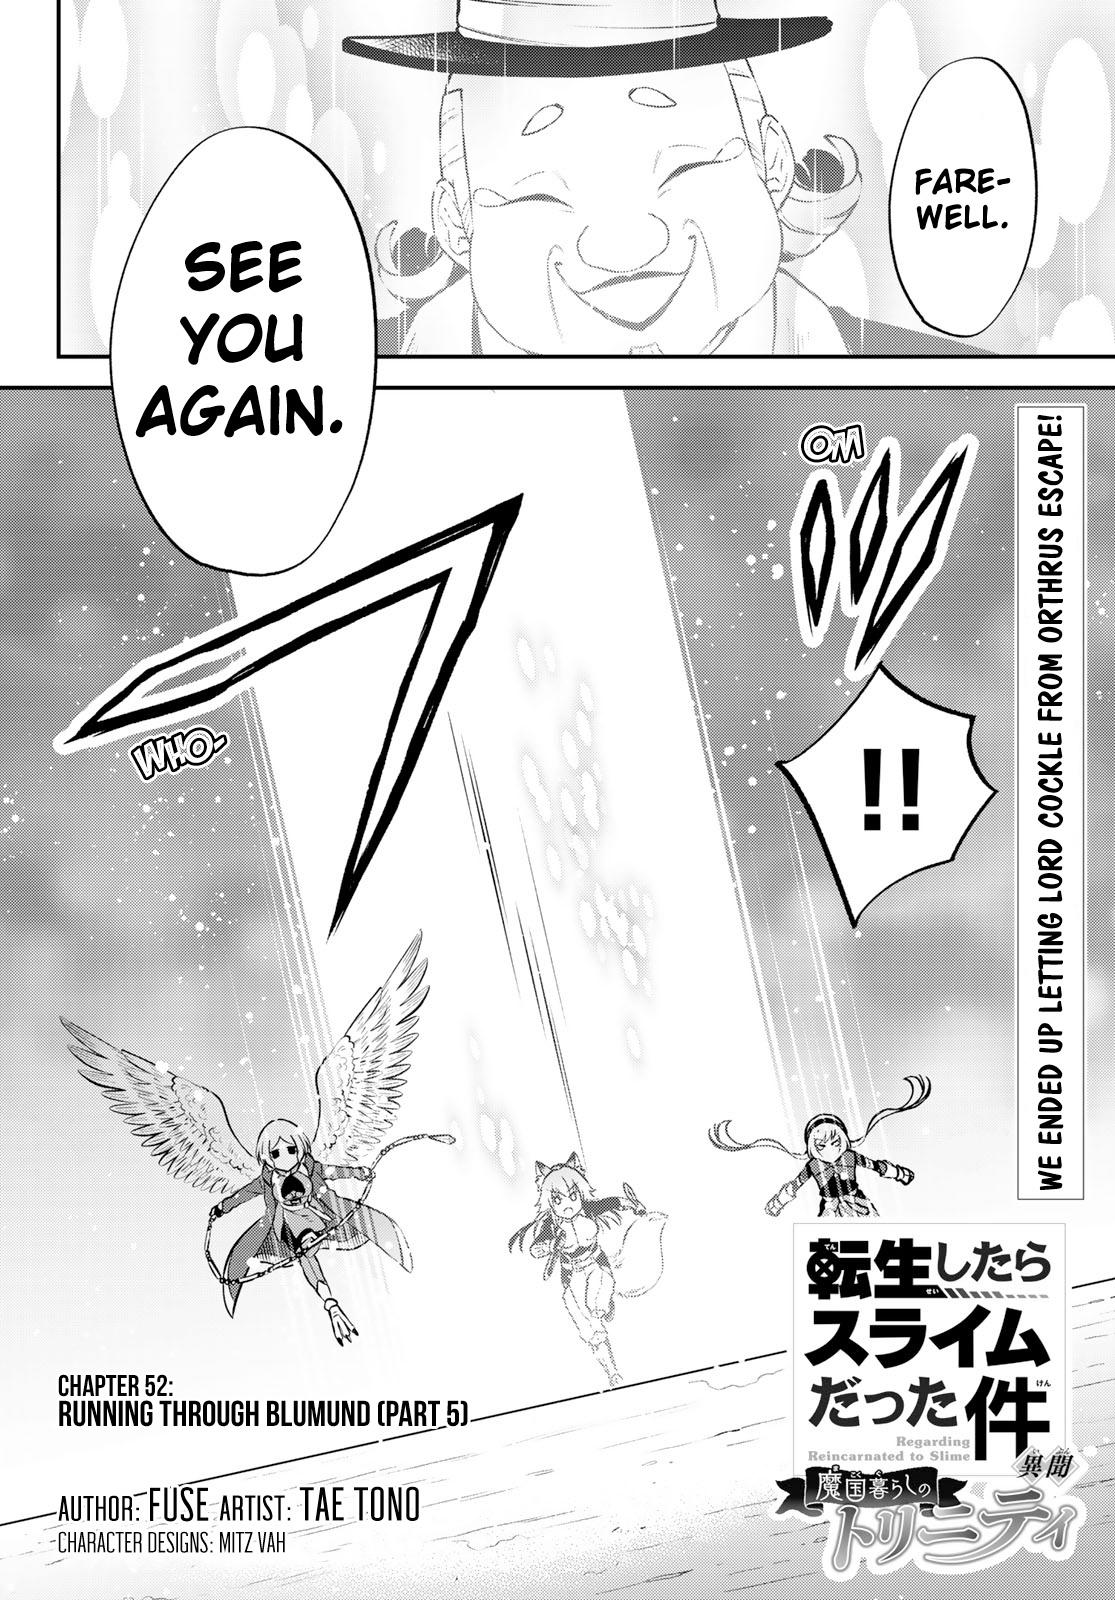 Read Tensei Shitara Slime Datta Ken Ibun ~Makoku Gurashi No Trinity~ Vol.1  Chapter 3: An Unexpected Visitor! A Rival Appears!? on Mangakakalot